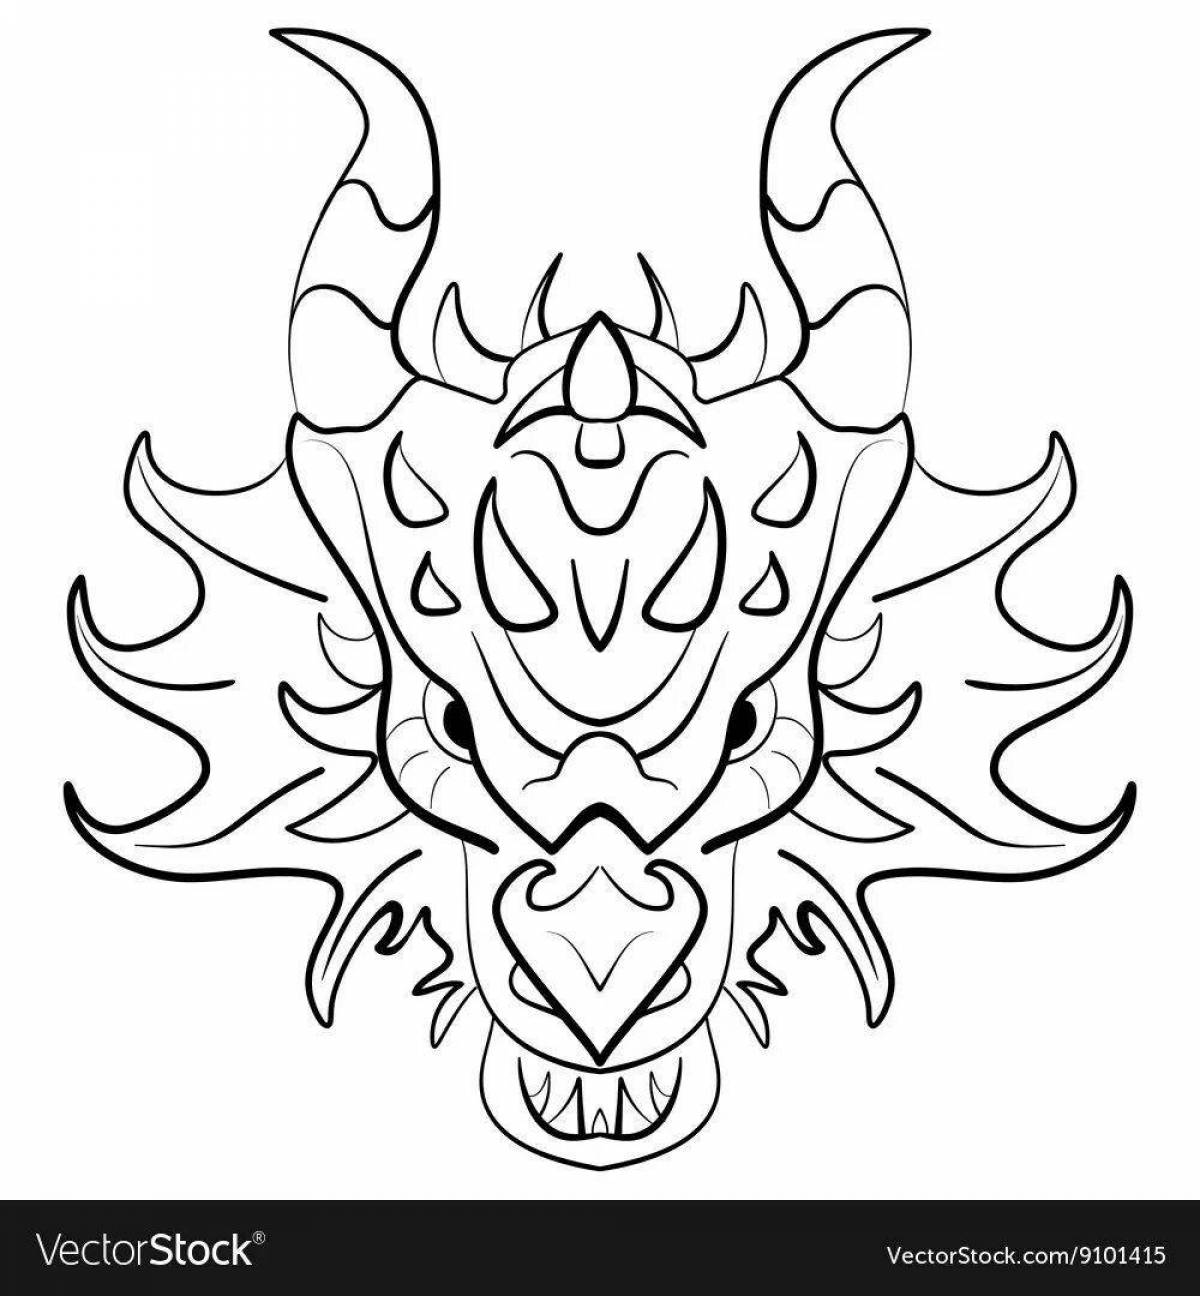 Scary dragon head coloring book